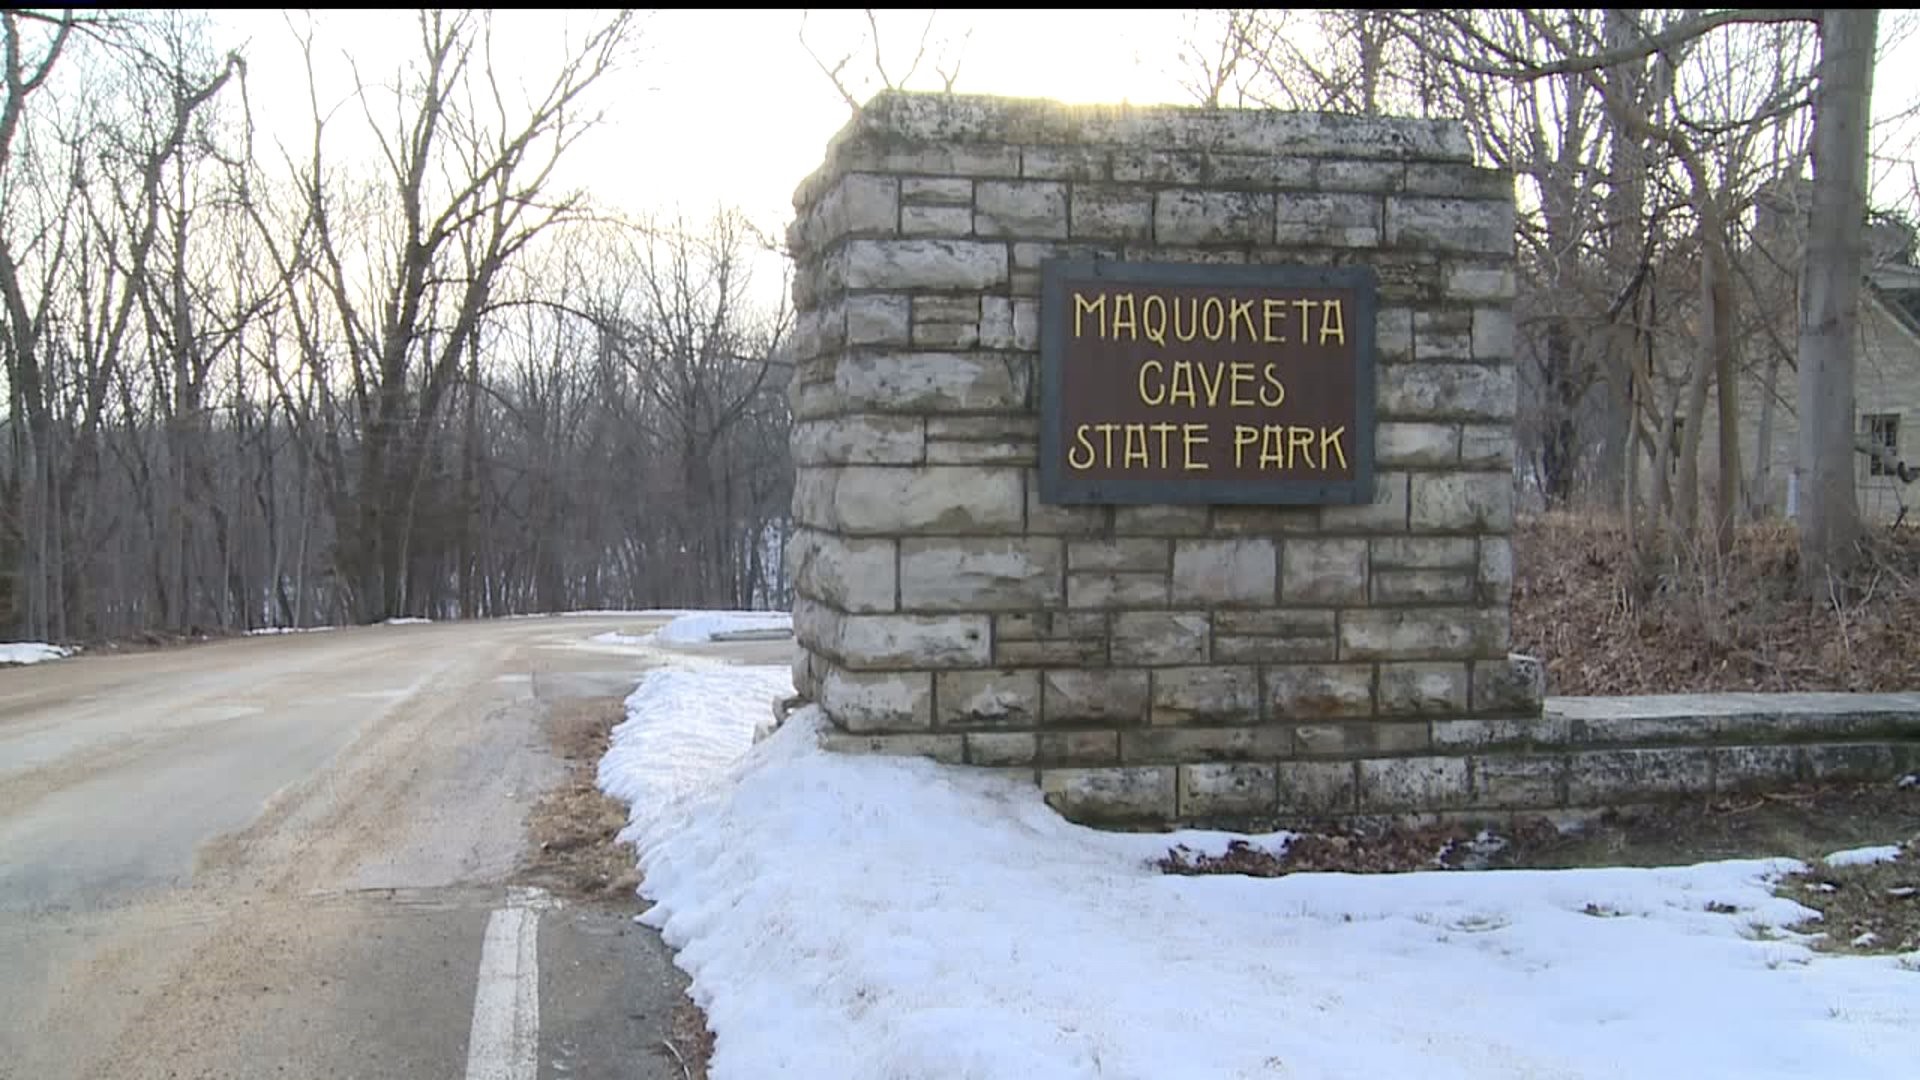 Maquoketa caves voted top Iowa attraction